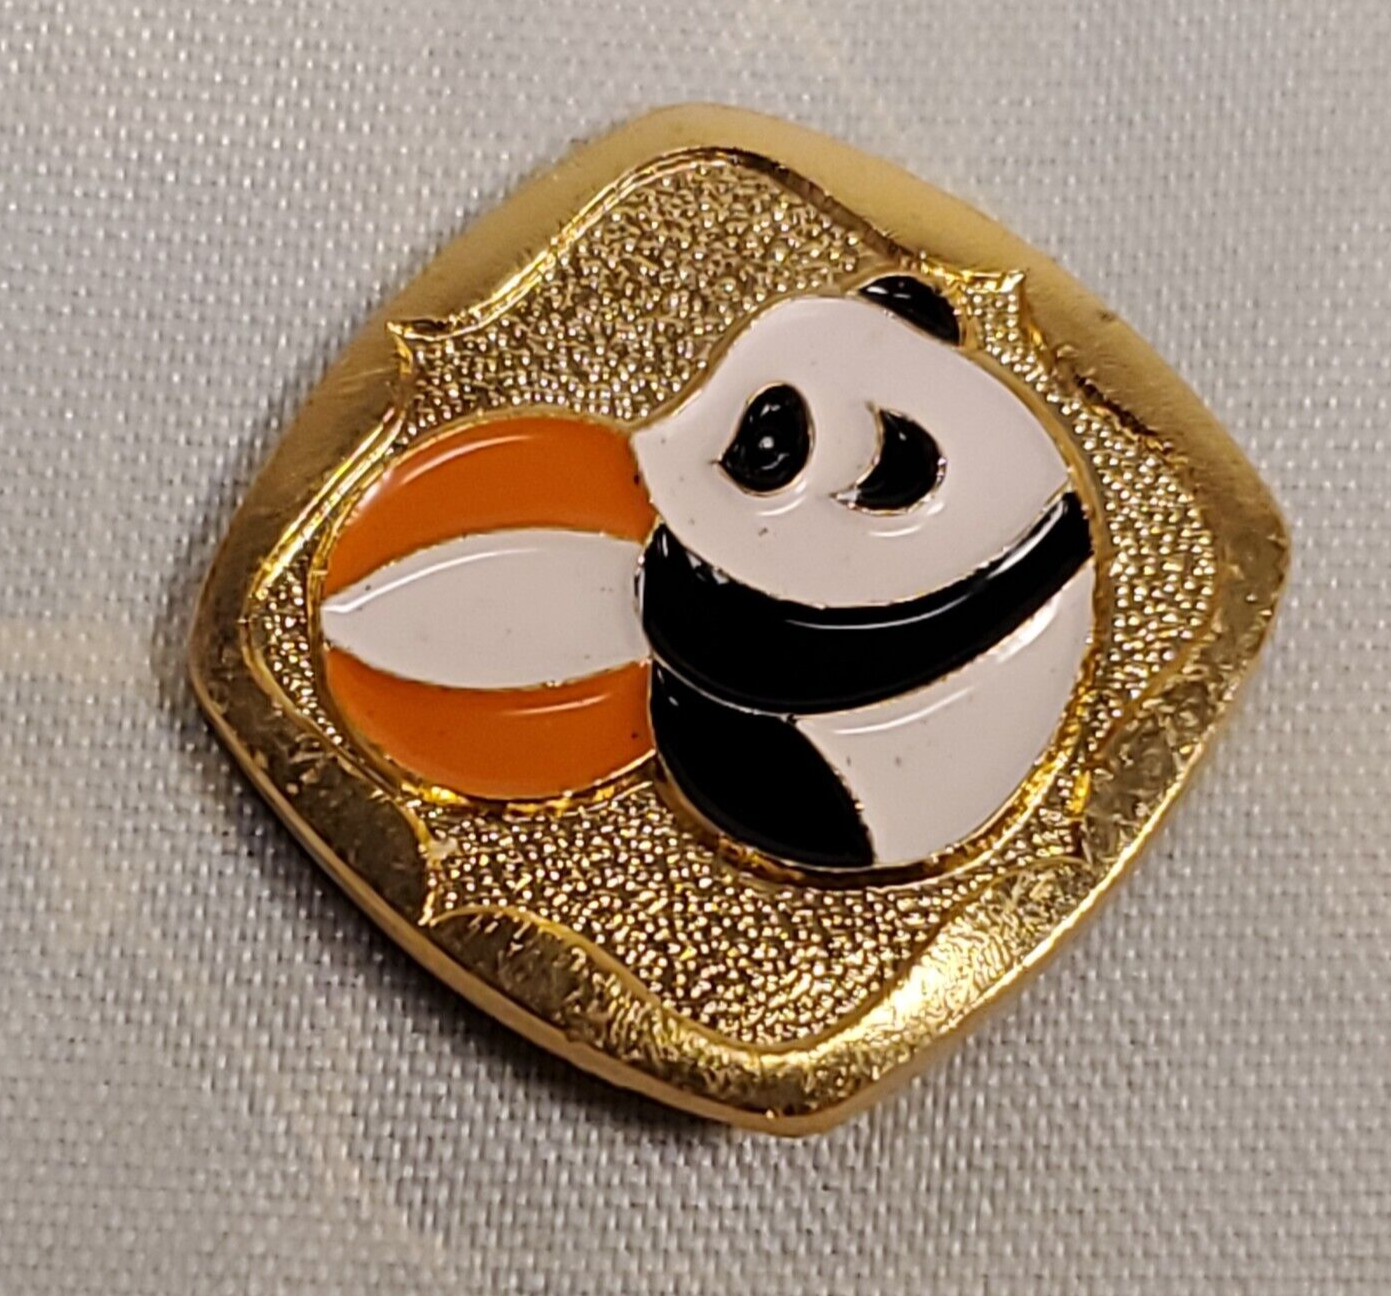 Chinese Exhibition China  Panda Pin